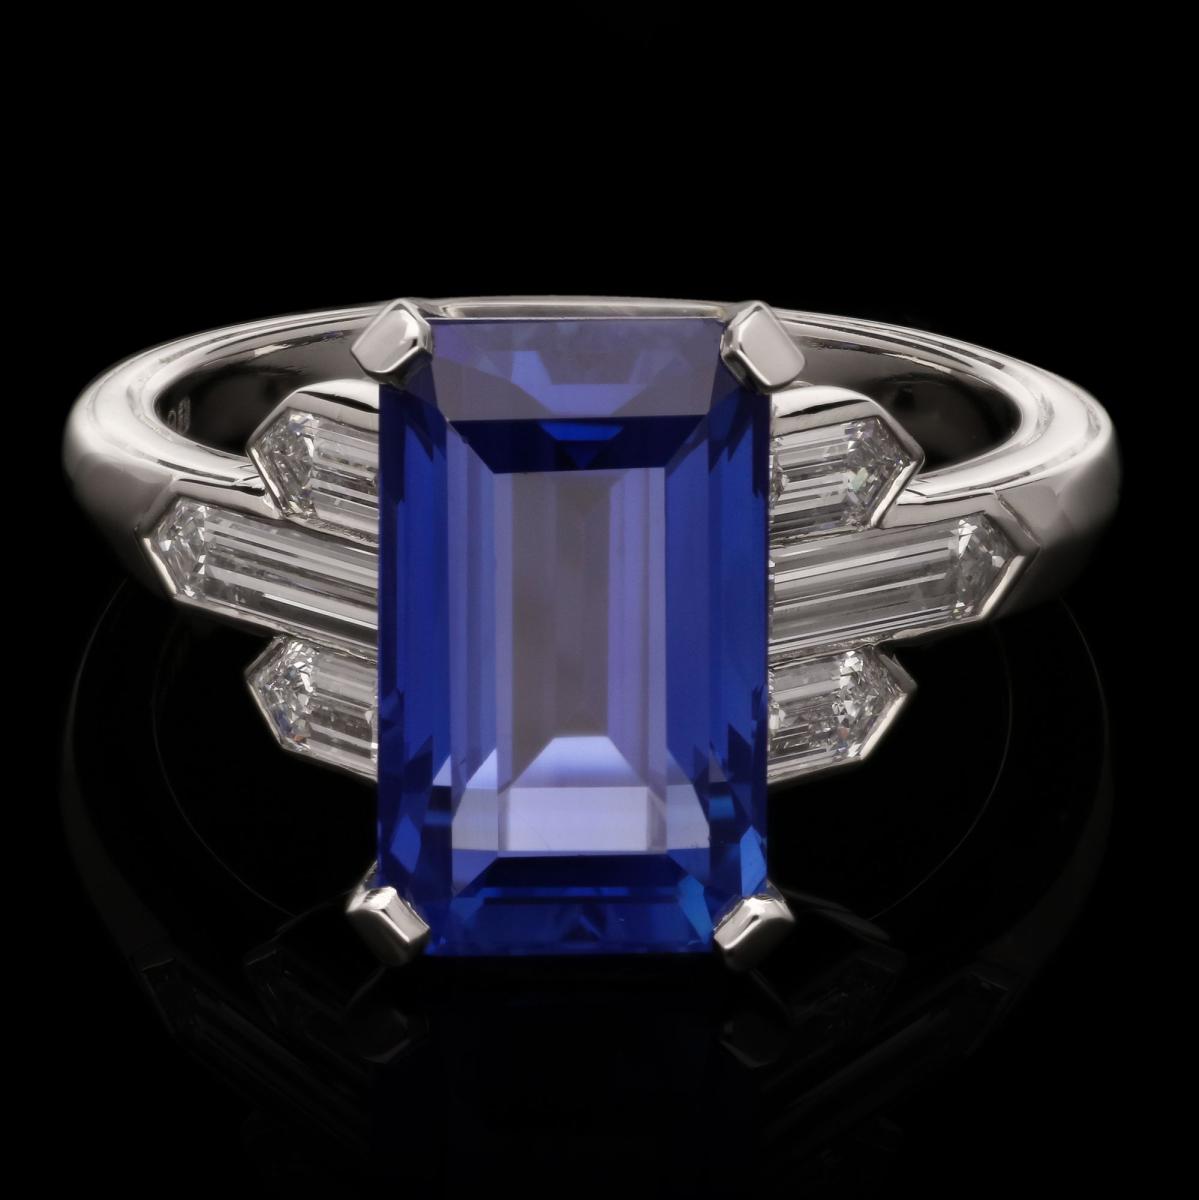 Hancocks Contemporary 6.19ct Ceylon Sapphire Ring With Bullet Cut Diamond Shoulders In Platinum